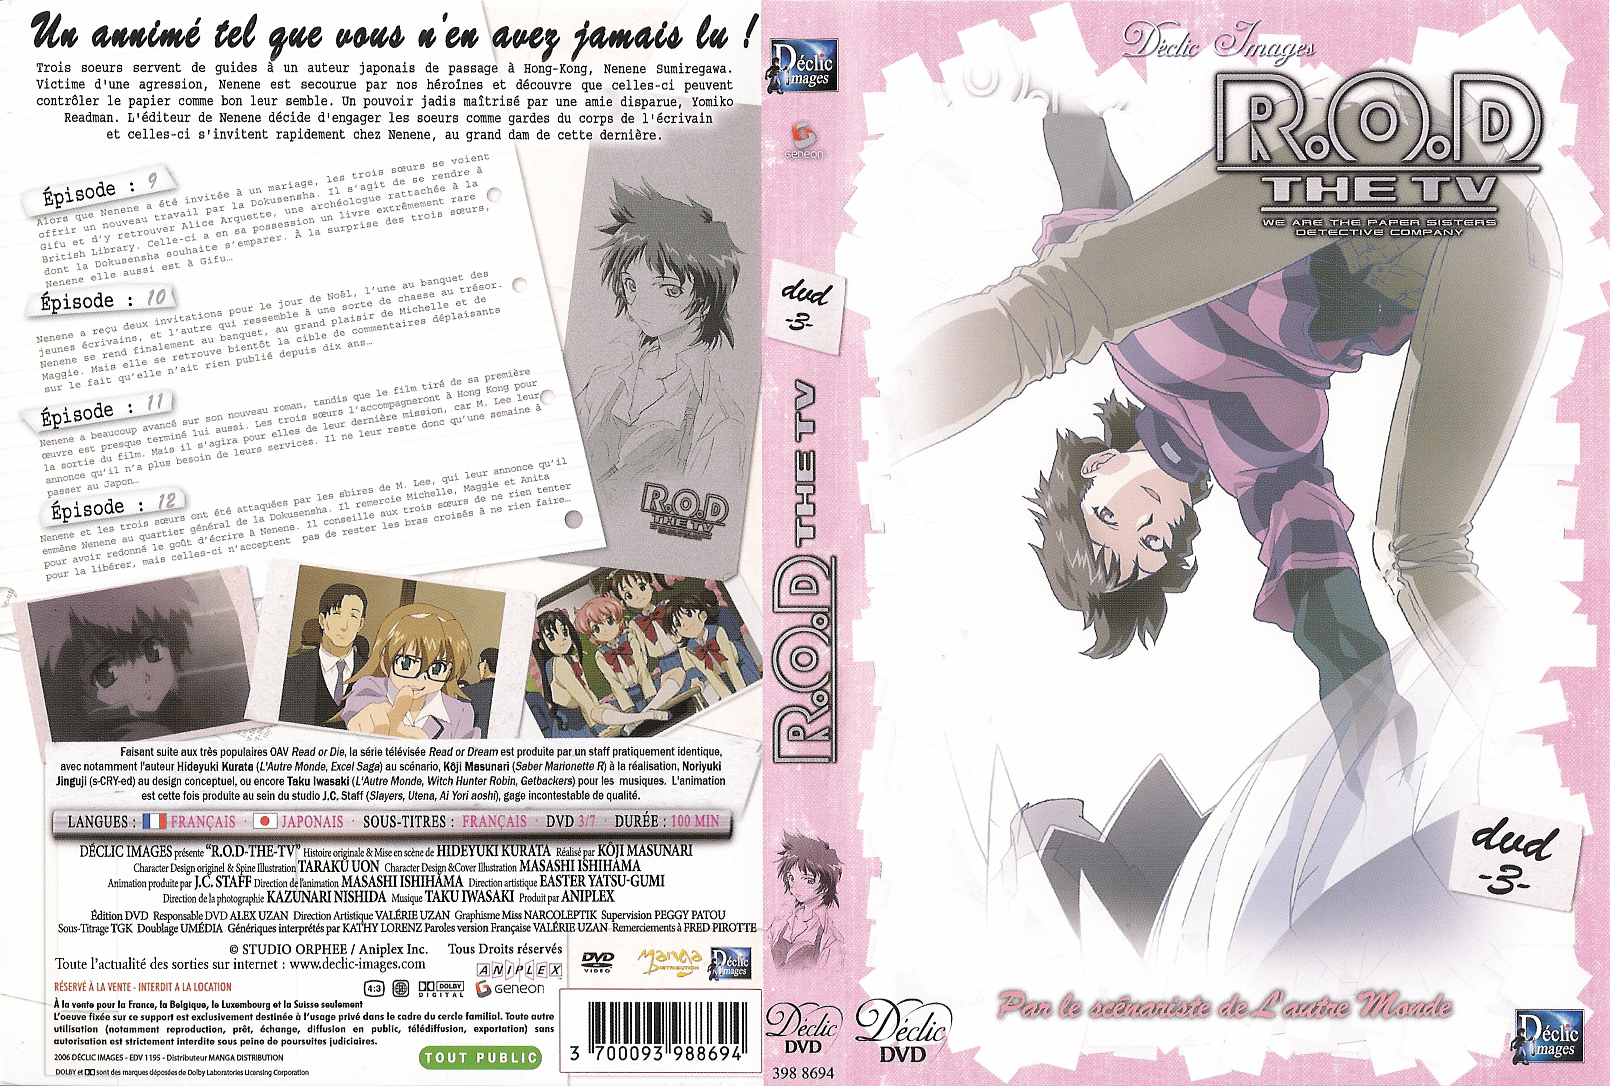 Jaquette DVD ROD vol 3